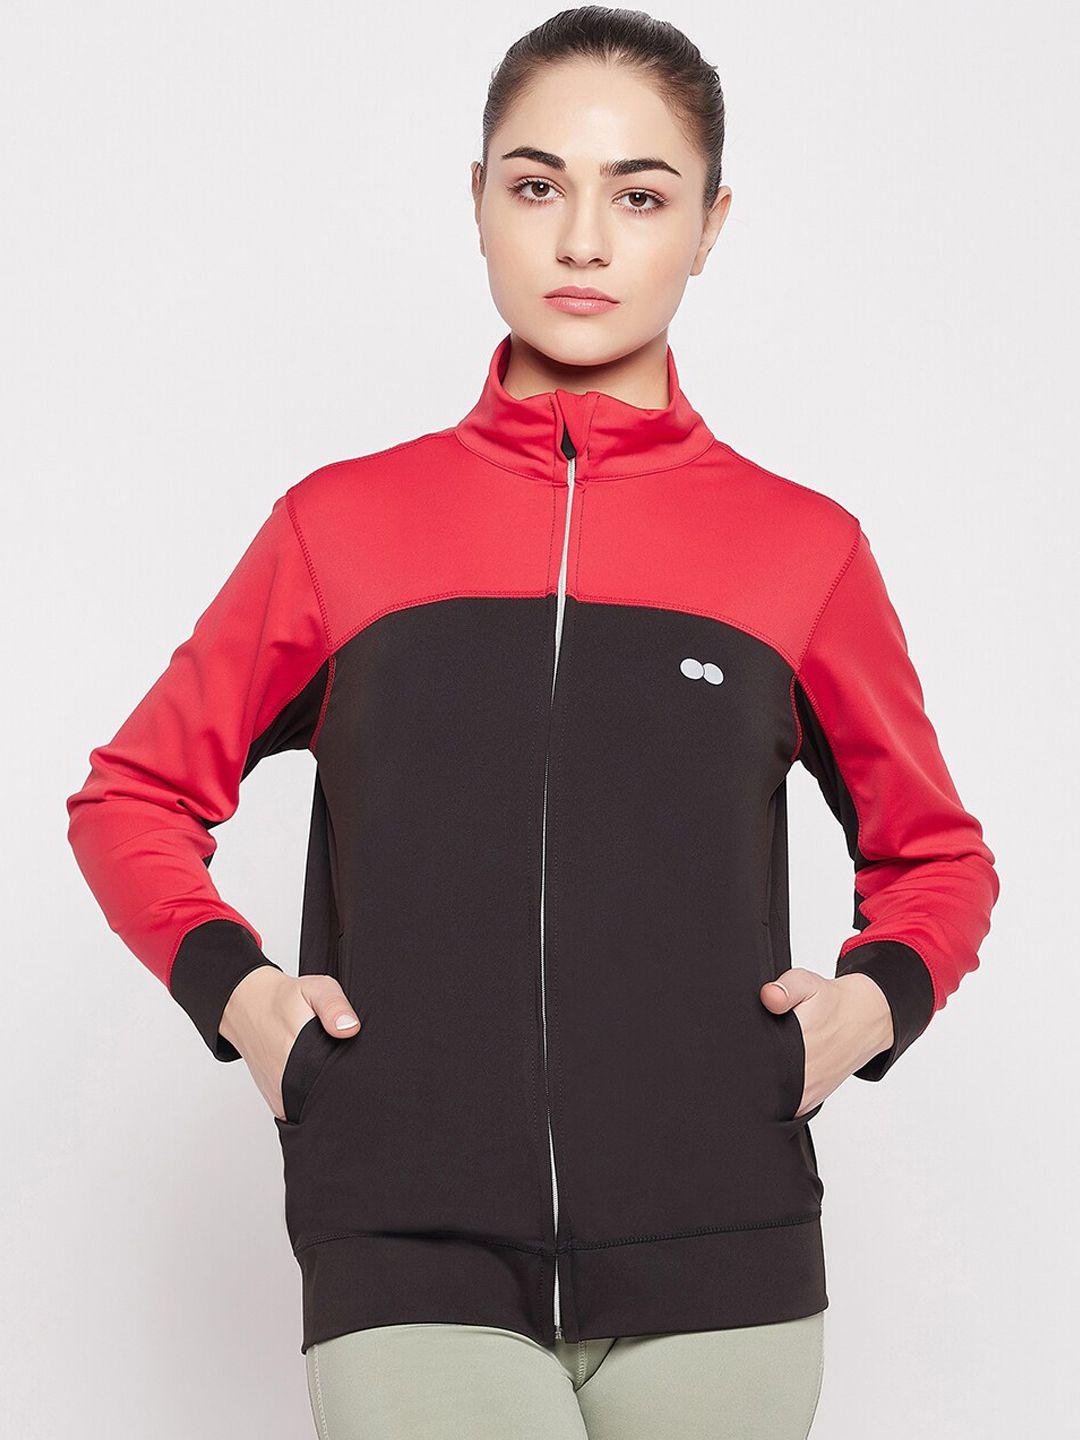 clovia-women-colourblocked-lightweight-training-or-gym-sporty-jacket